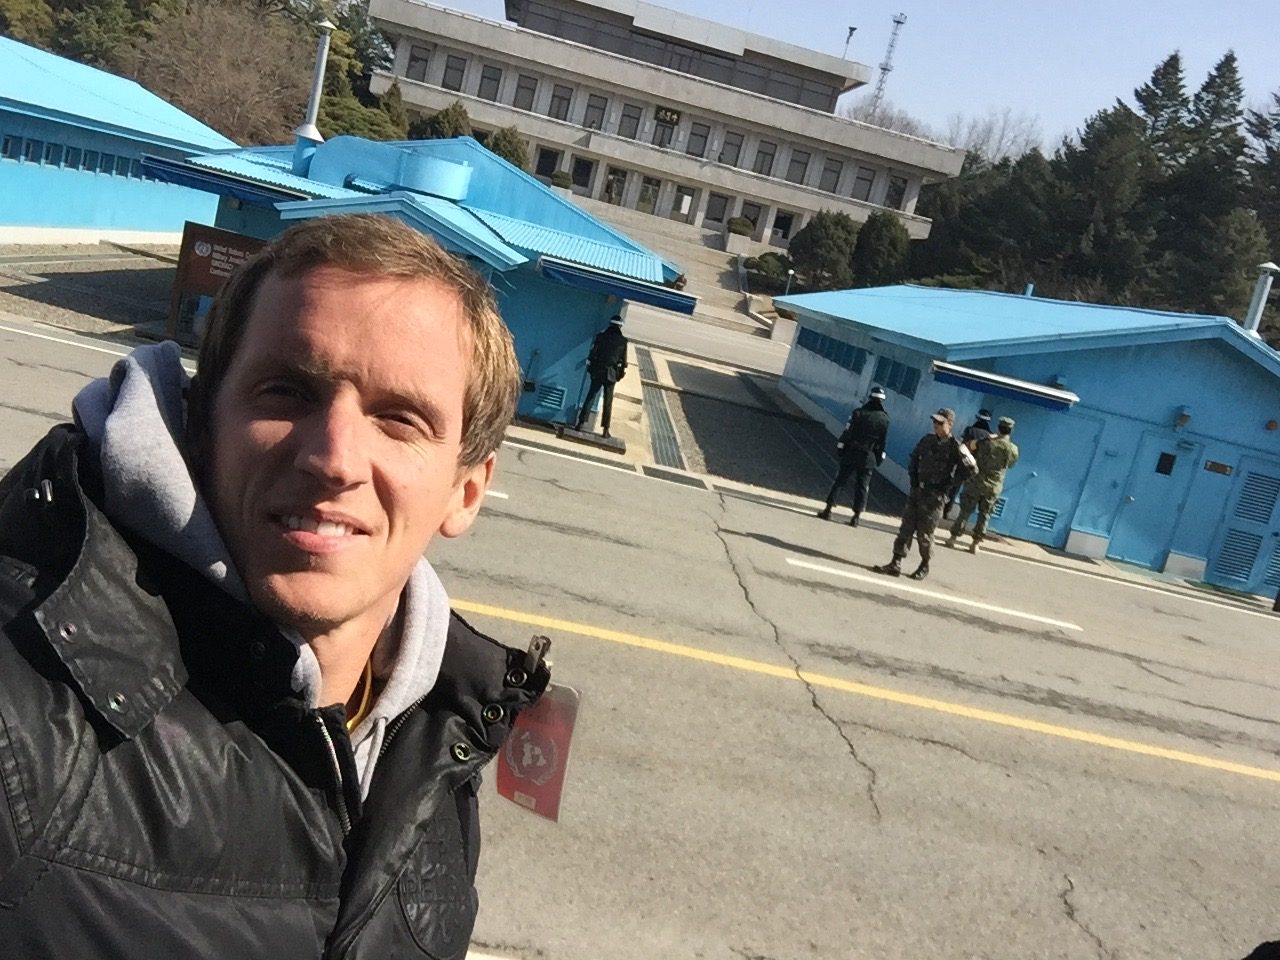 David Simpson in DMZ, South Korea. The DMZ